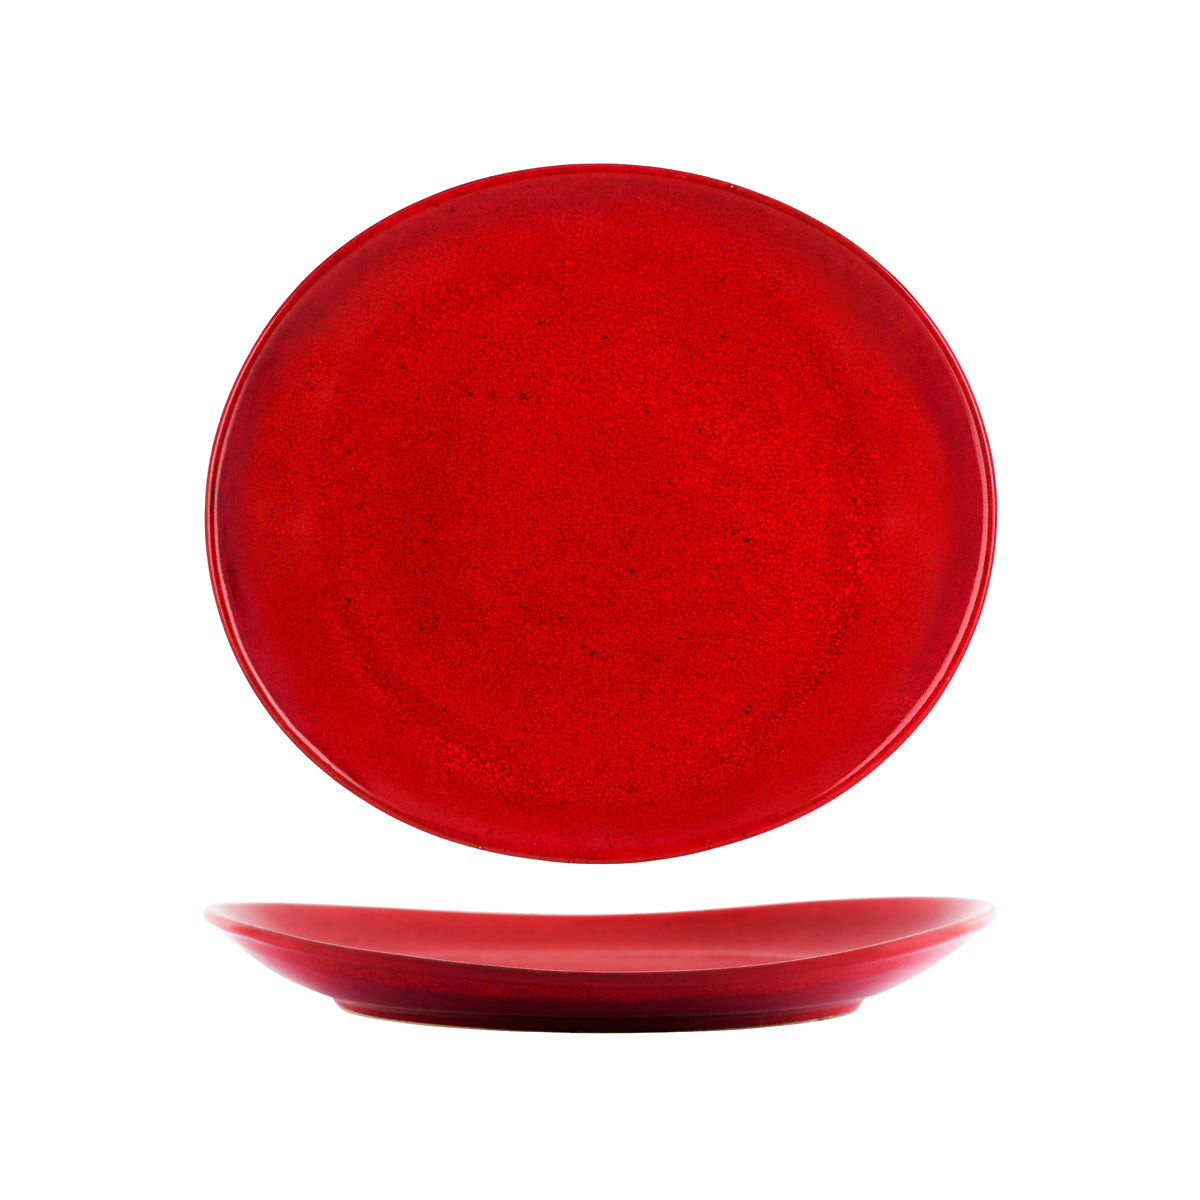 98221 Tablekraft Artistica Reactive Red Oval Plate 297mm Tomkin Australia Hospitality Supplies